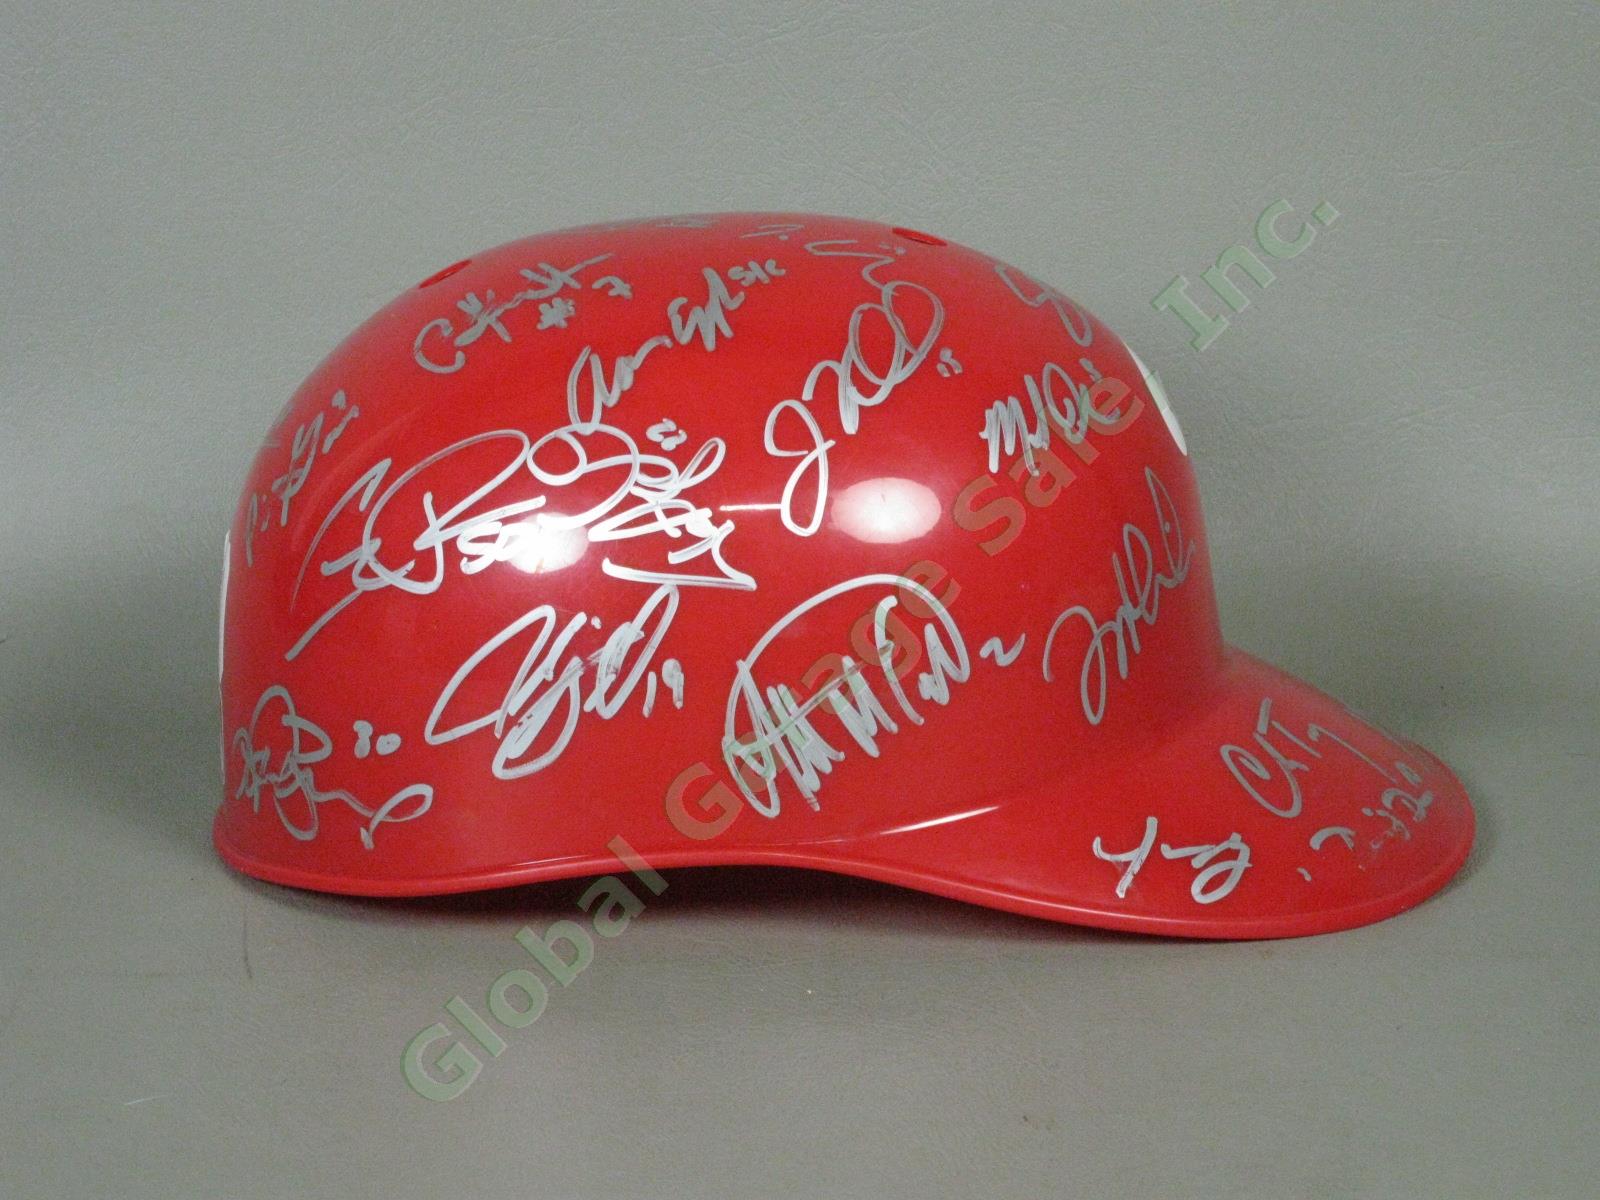 2010 Williamsport Crosscutters Team Signed Baseball Helmet Philadelphia Phillies 1